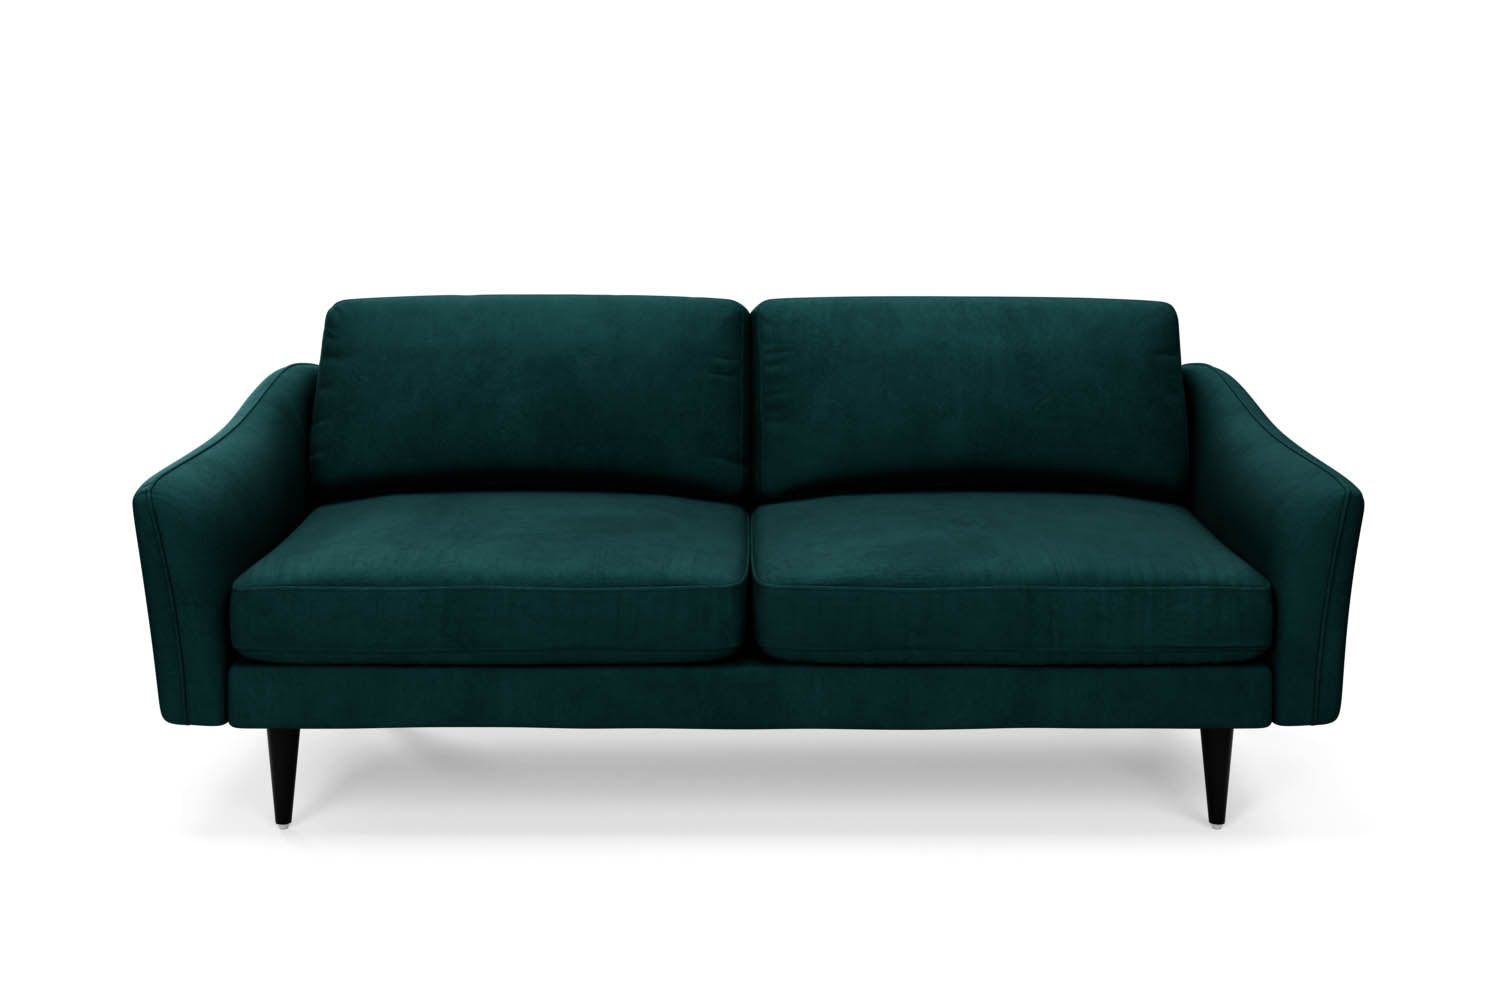 SNUG | The Rebel 3 Seater Sofa in Pine Green variant_40837198807088